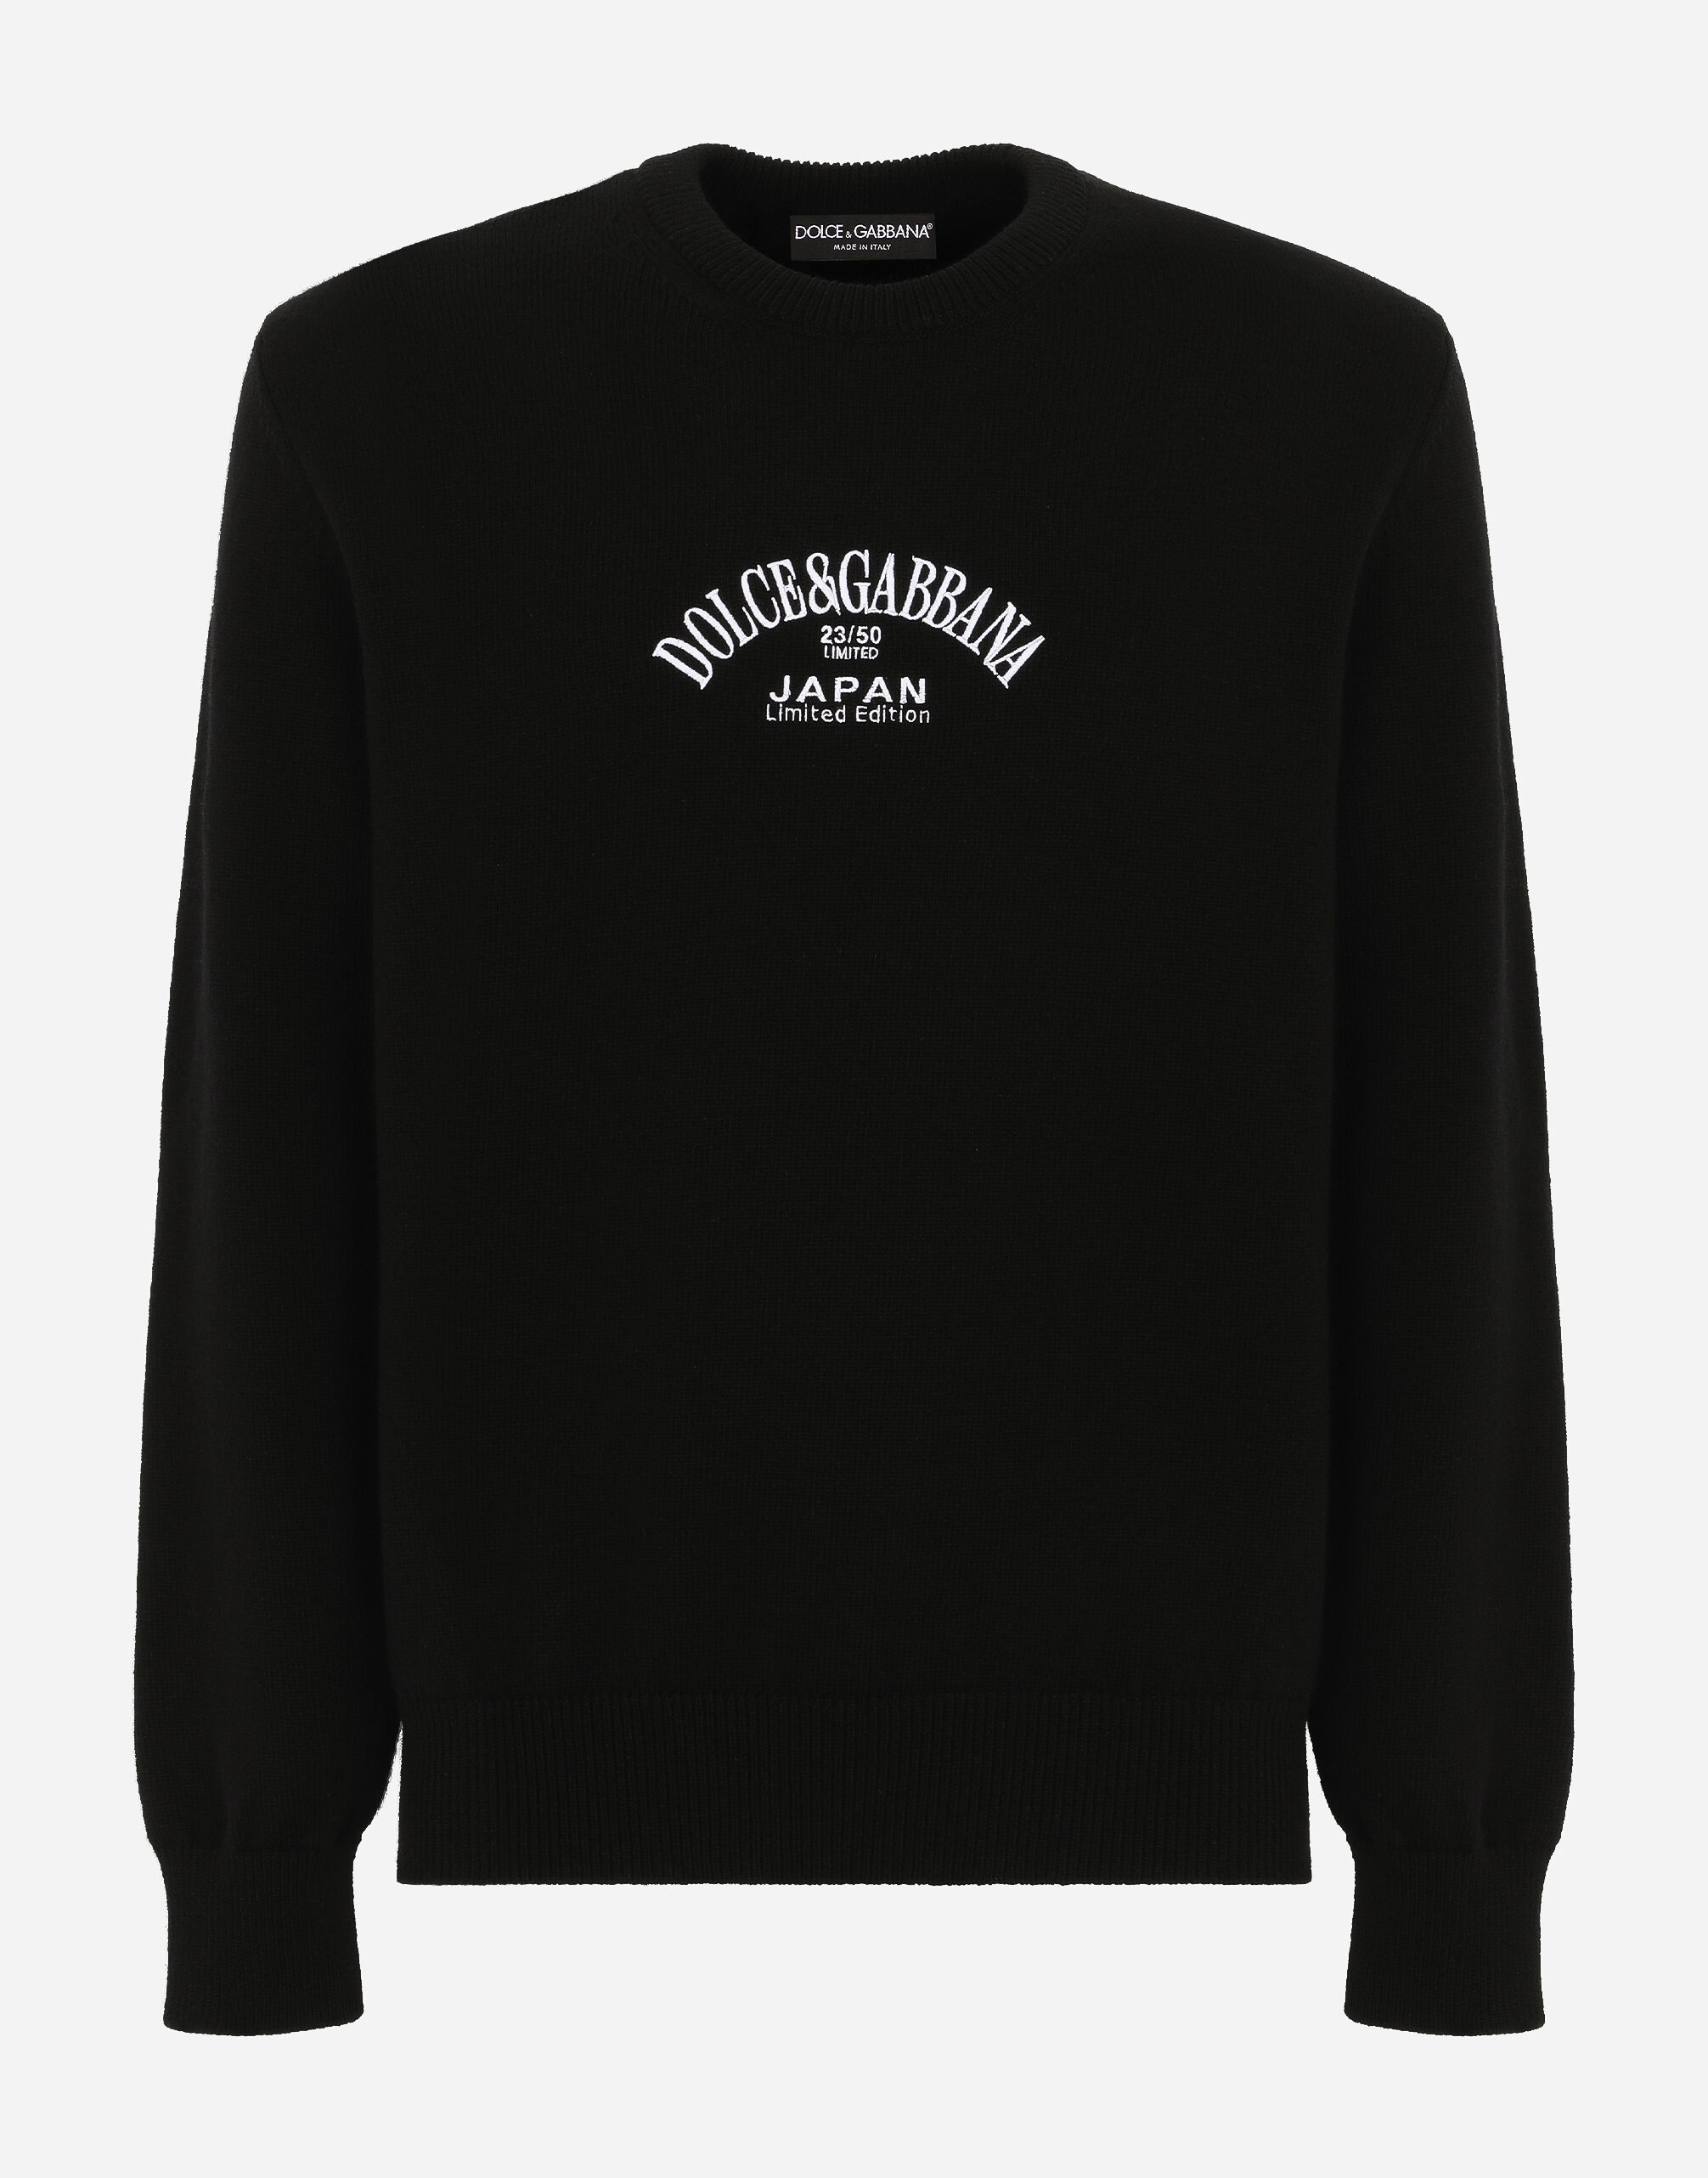 Dolce & Gabbana クルーネックセーター ロゴエンブロイダリー ブラック I9645MGH772